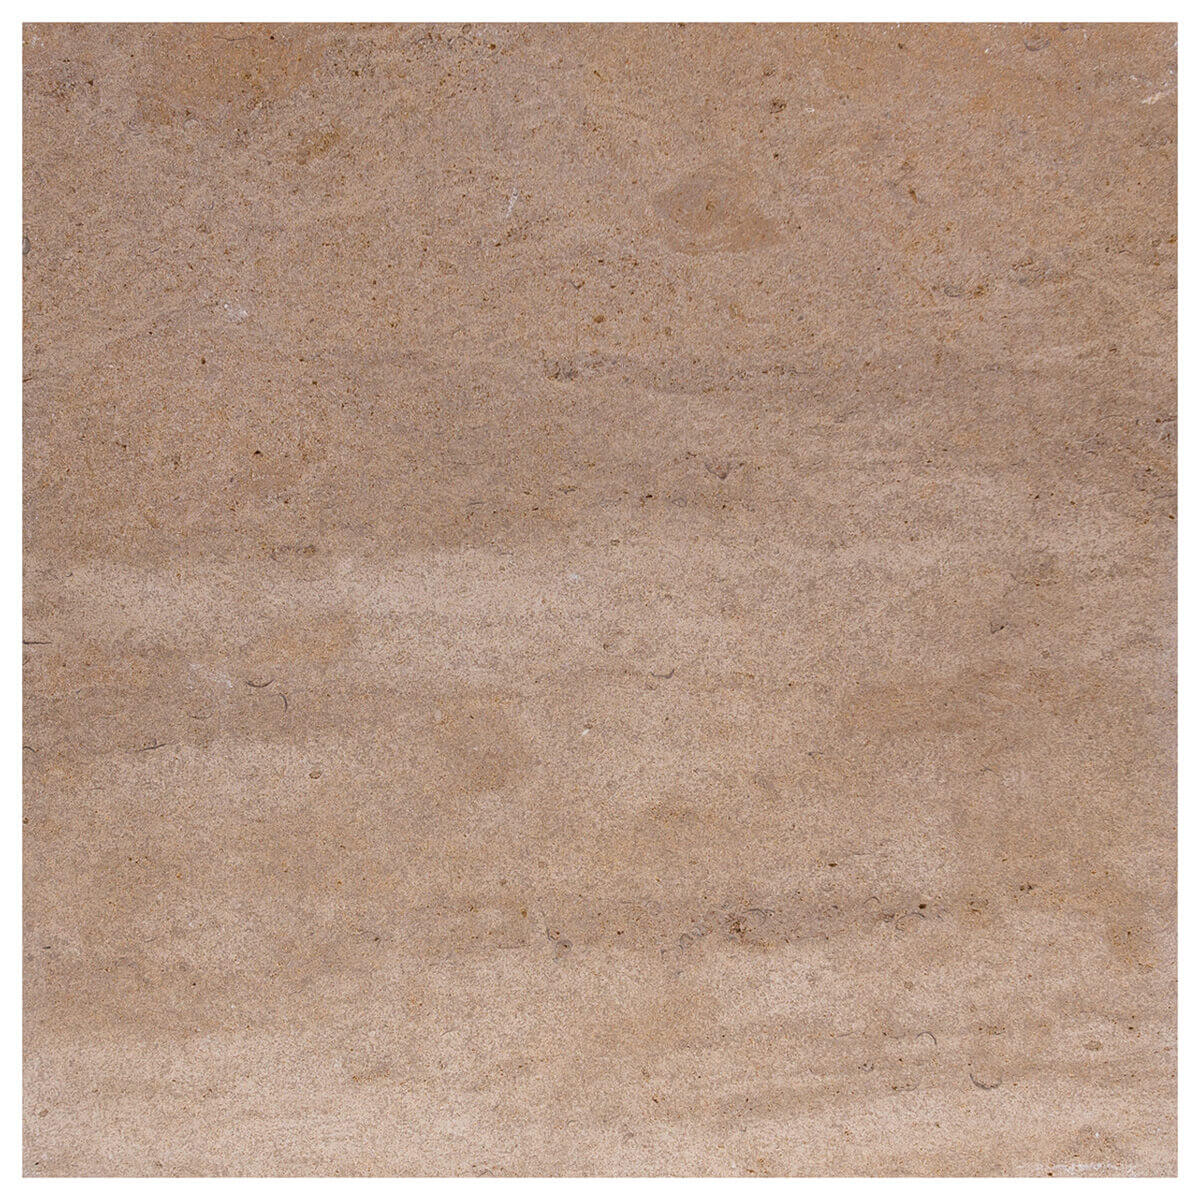 haussmann beaumaniere classic limestone square natural stone field tile 18x18 honed